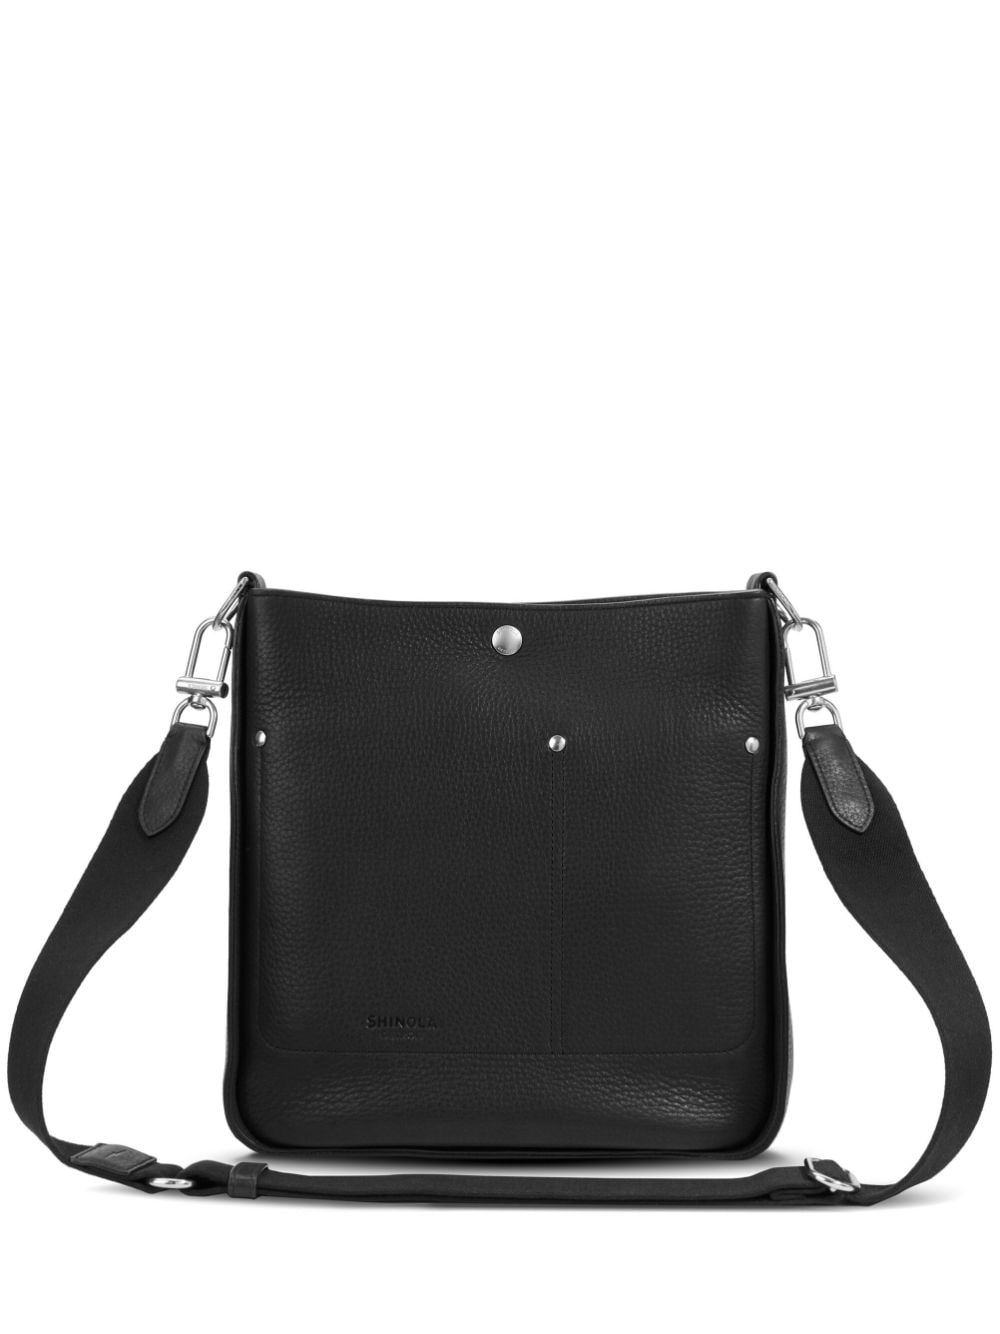 Shinola The Pocket leather crossbody bag - Black von Shinola